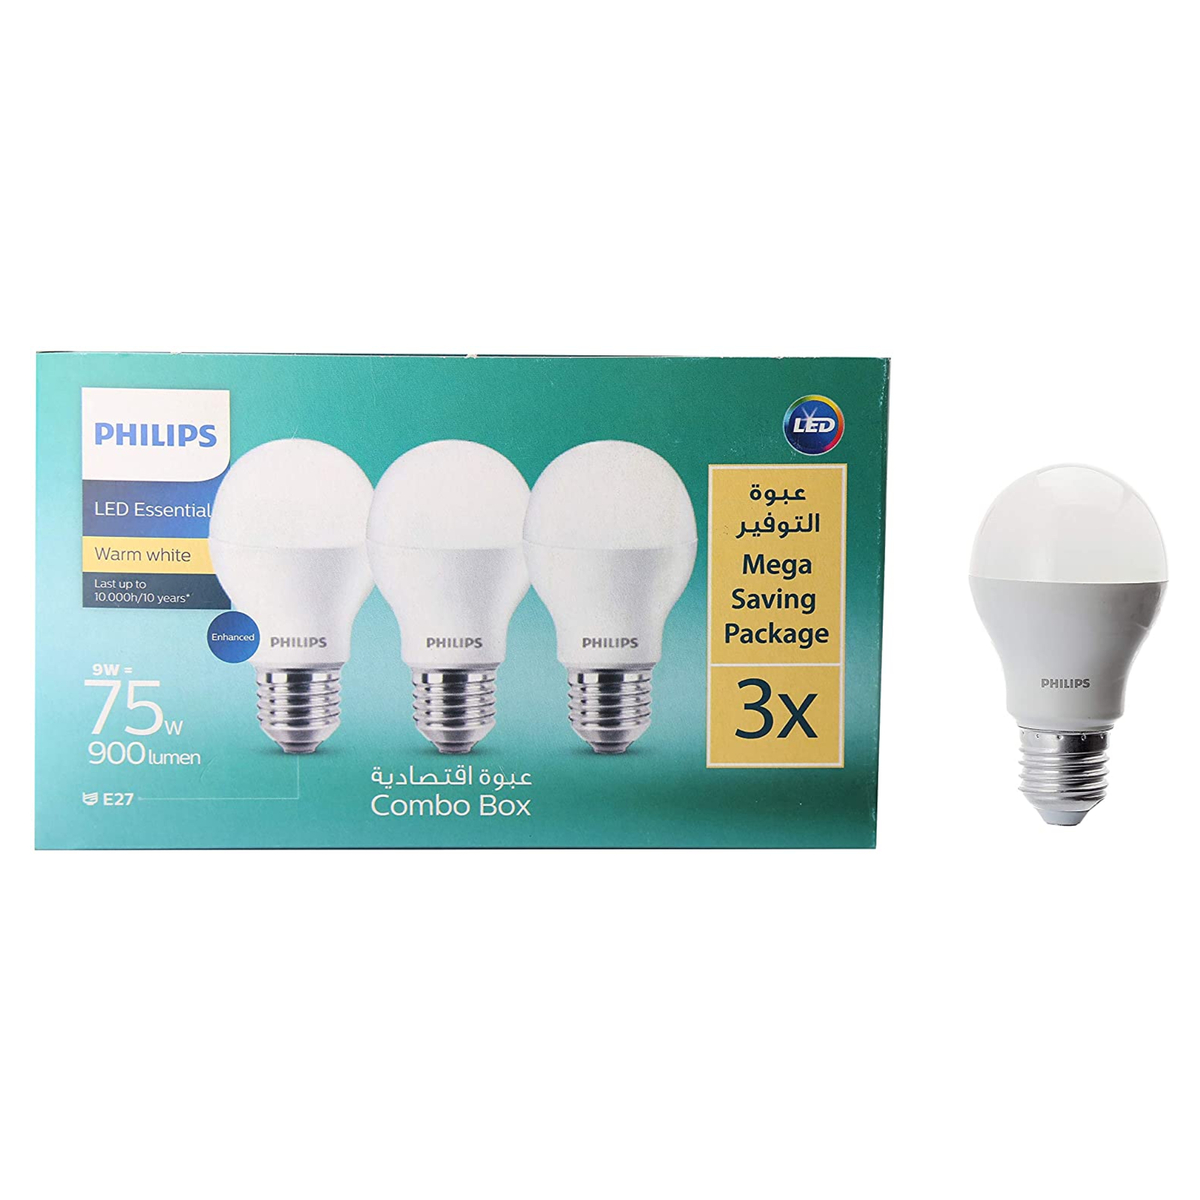 Philips 9-Watts E27 LED Warm White LED Bulb, Pack of 3, (Ace Saver)